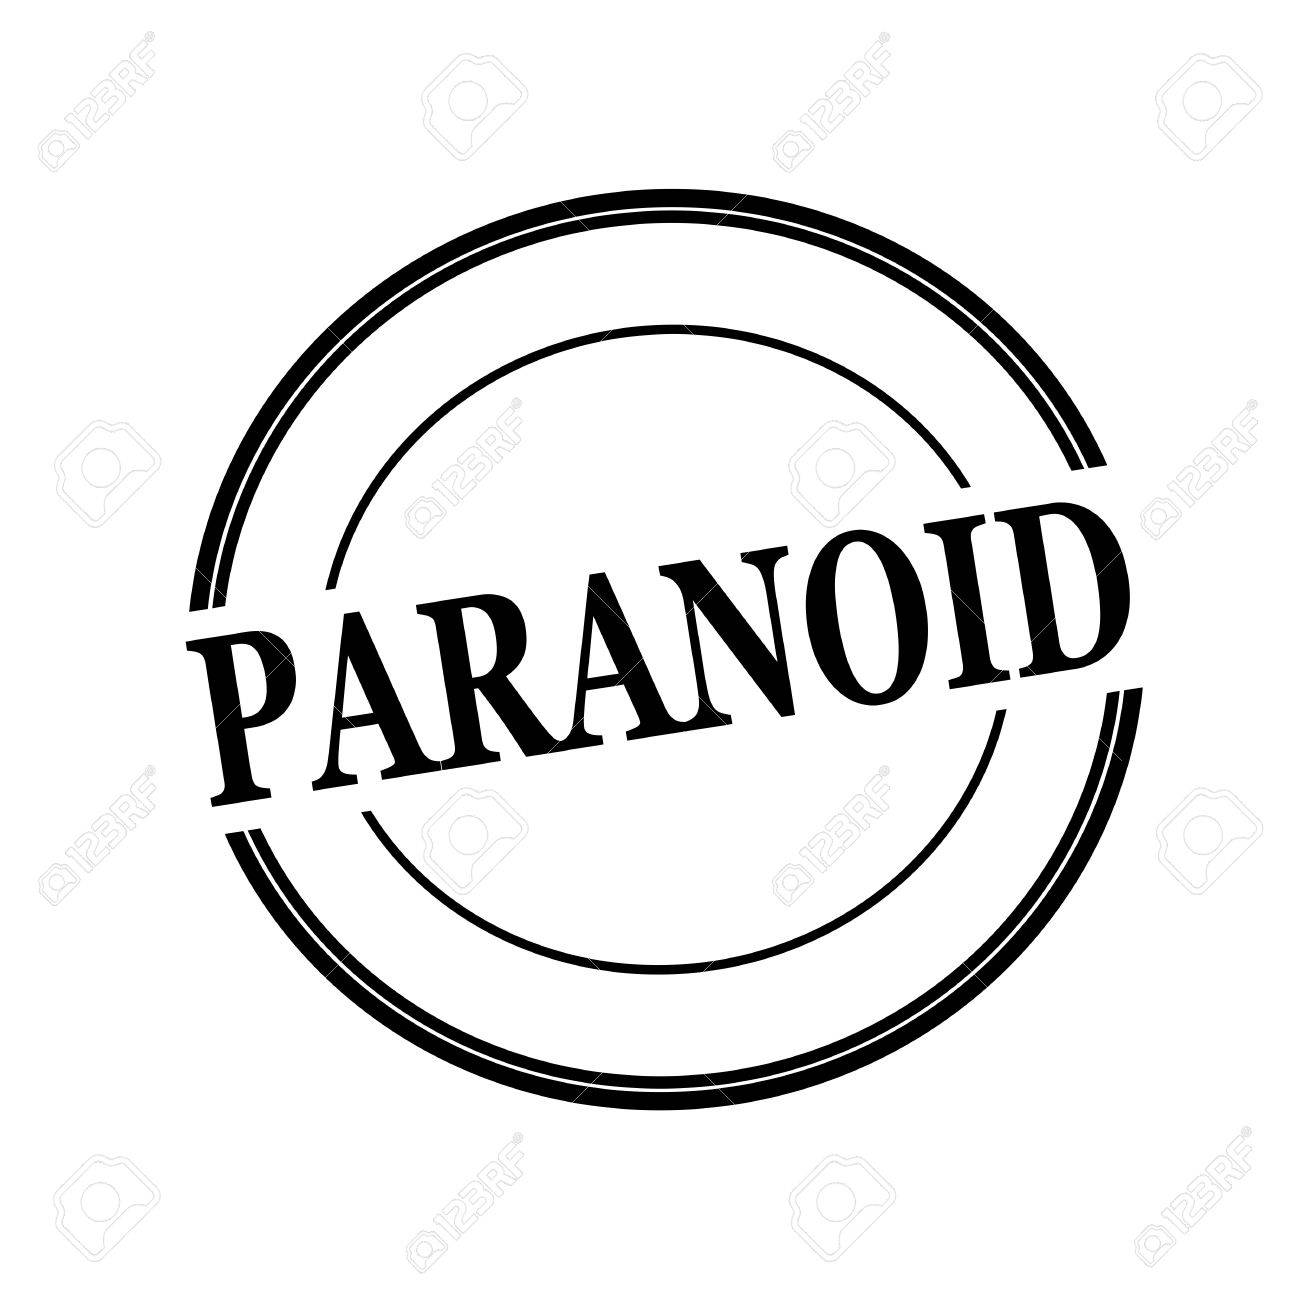 Paranoid Black Stamp Text On Circle White Background Stock